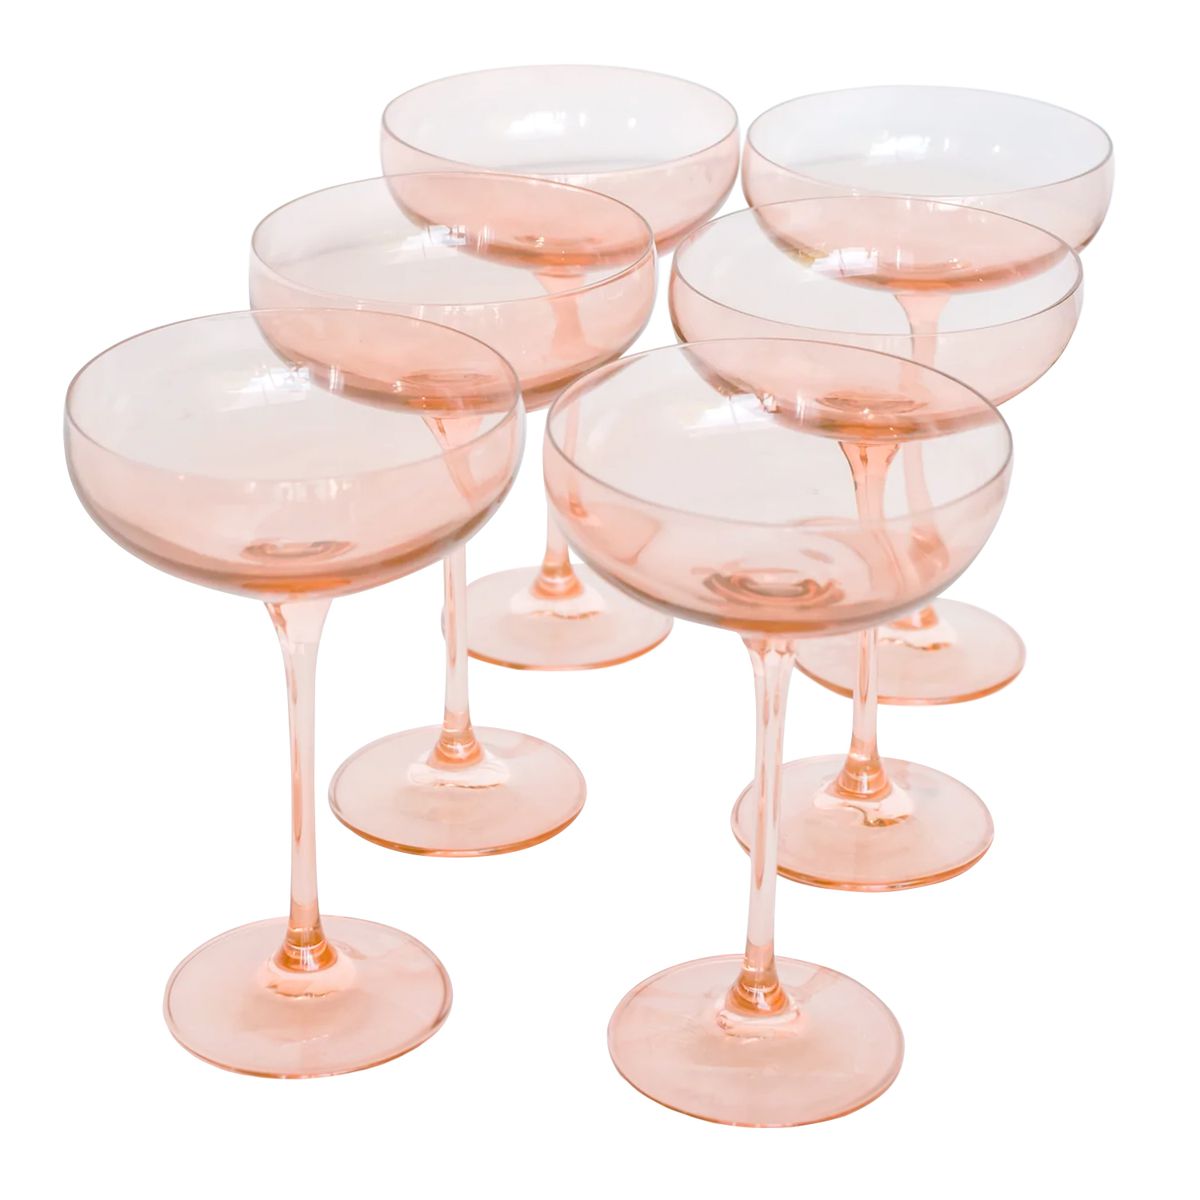 Estelle Stem Coupe Glasses pink